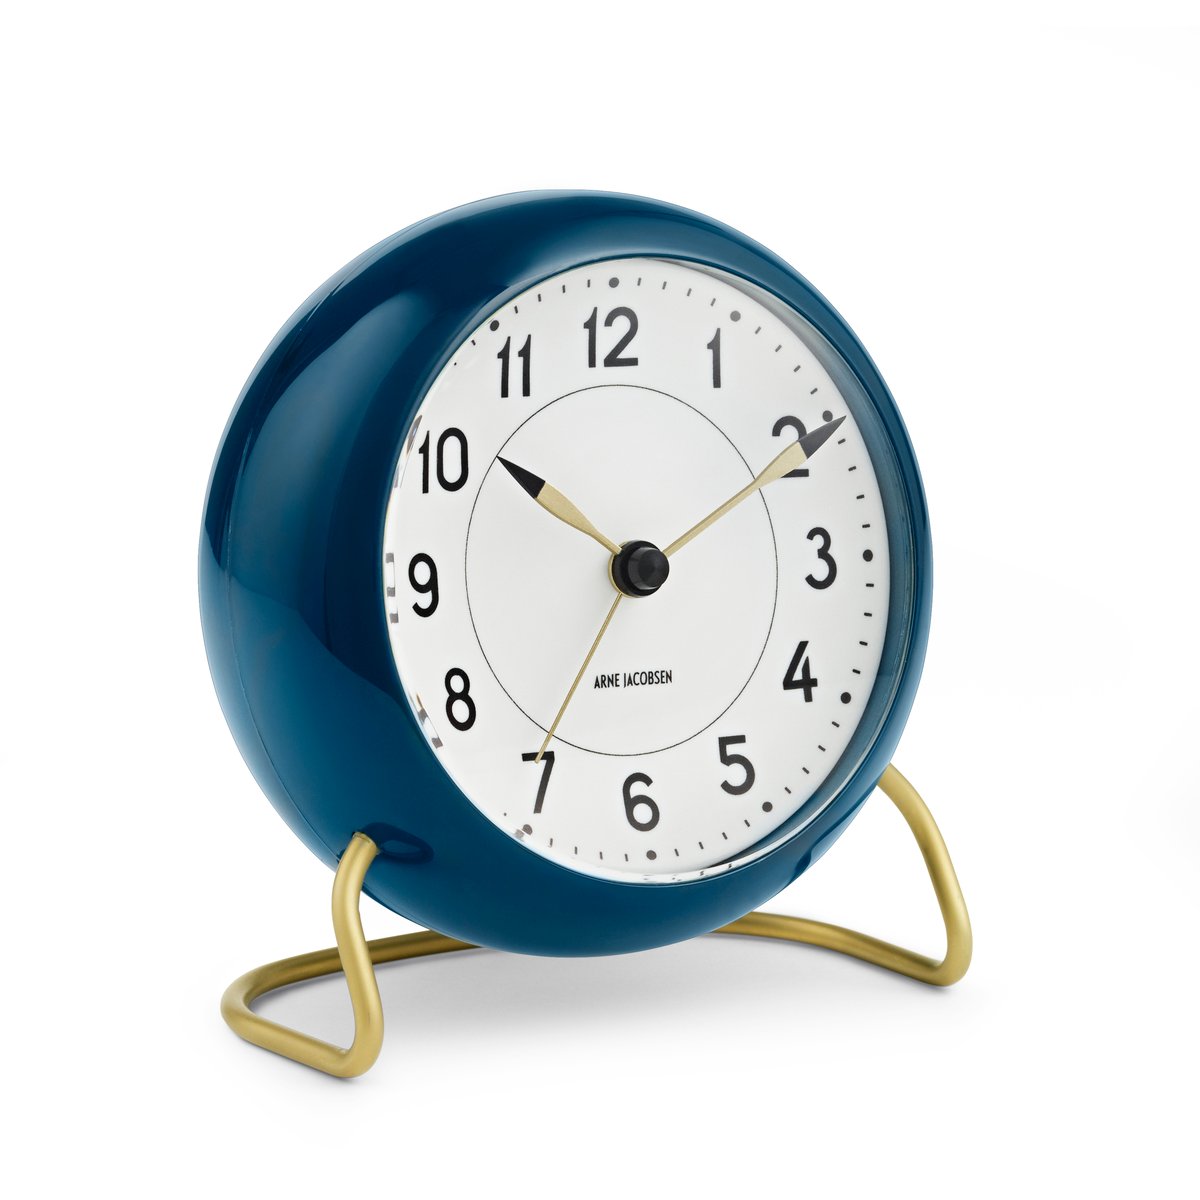 Arne Jacobsen Clocks AJ Station tafelklok petrolblauw petrolblauw